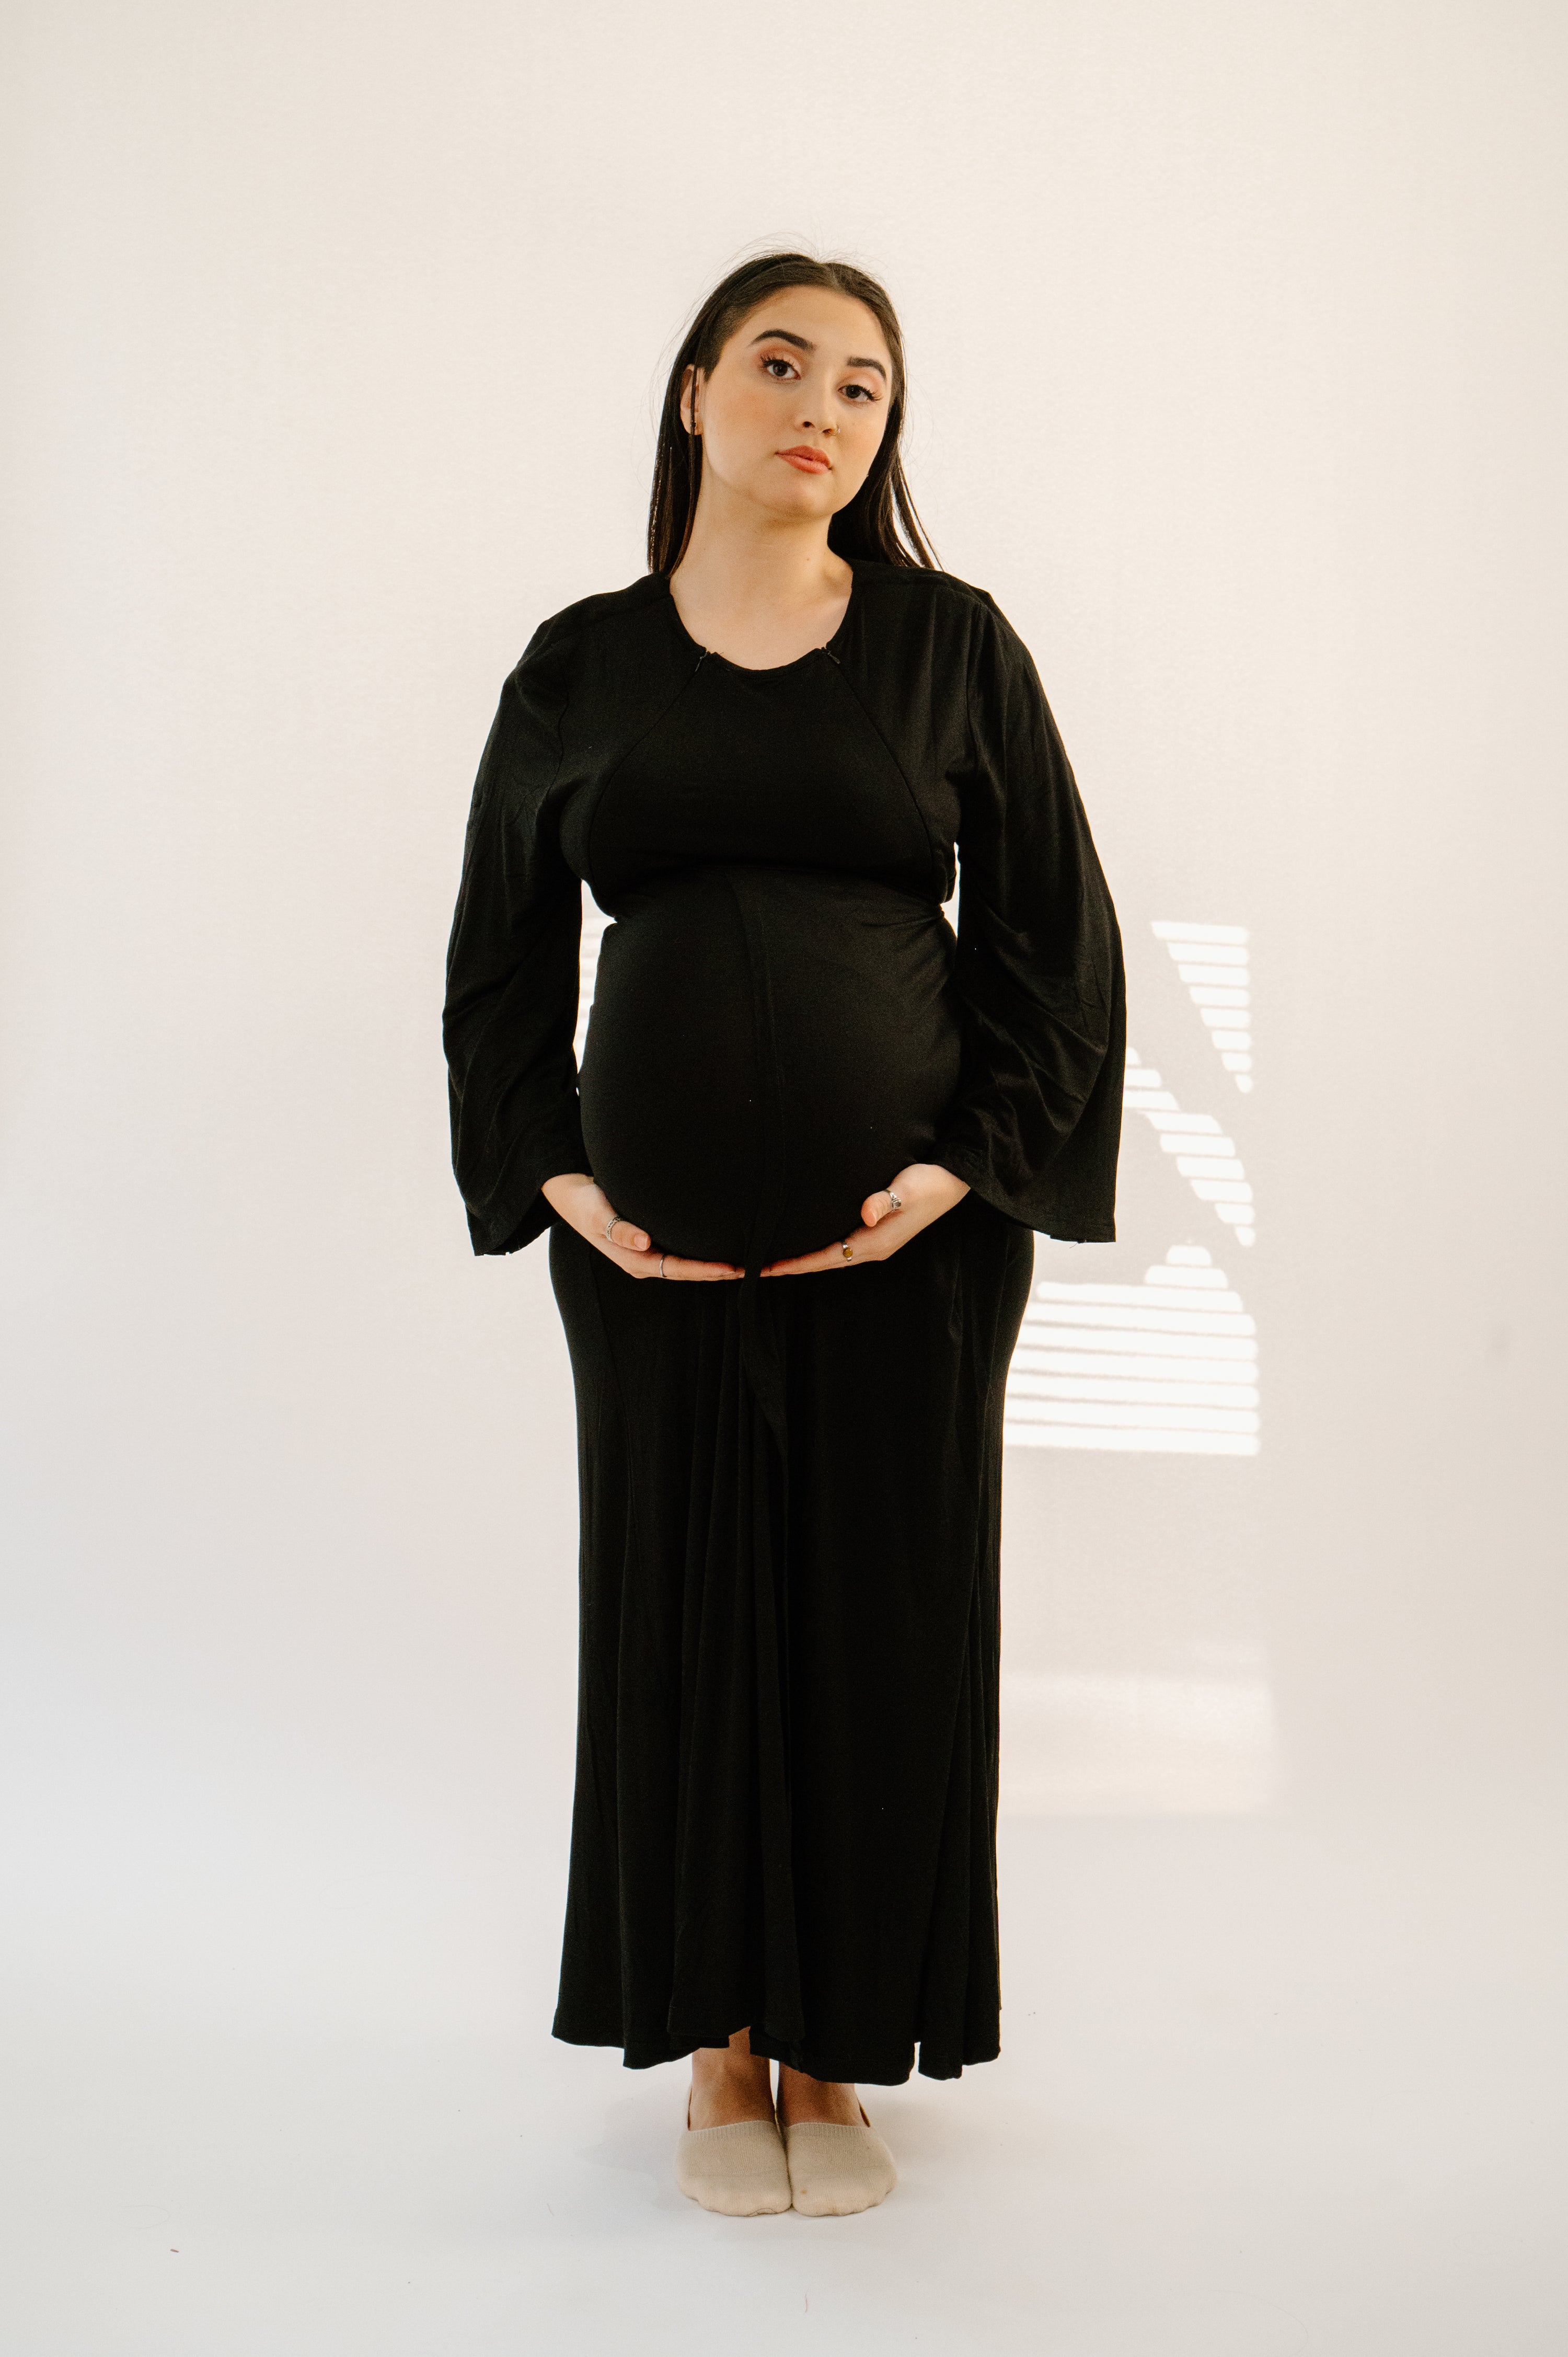 Nadia Labor & Postpartum Gown in Mauve